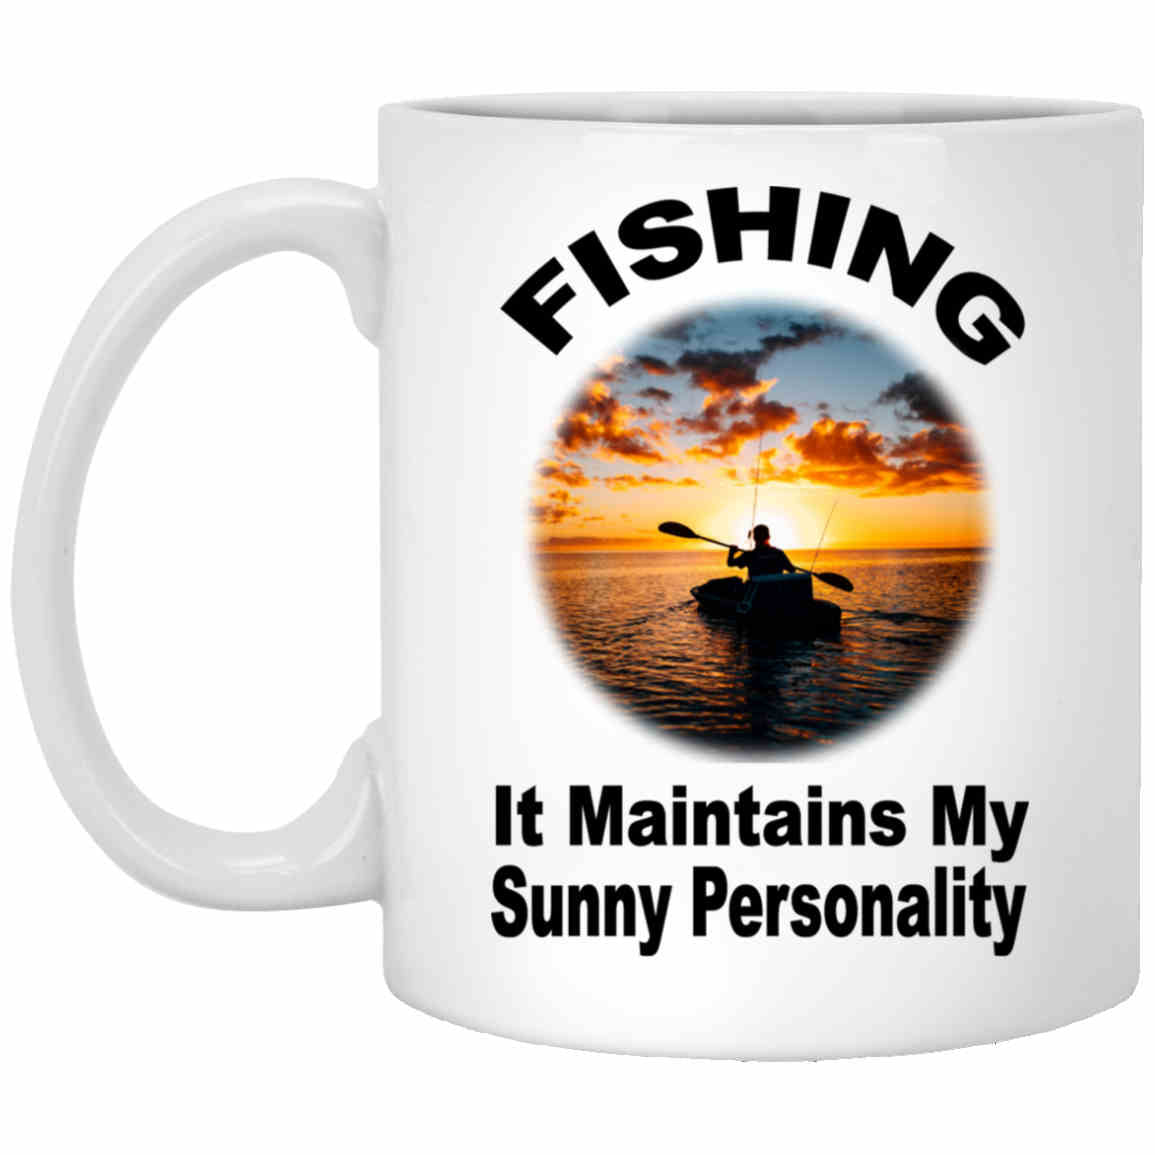 Fishing maintains my sunny personality 11 oz mug